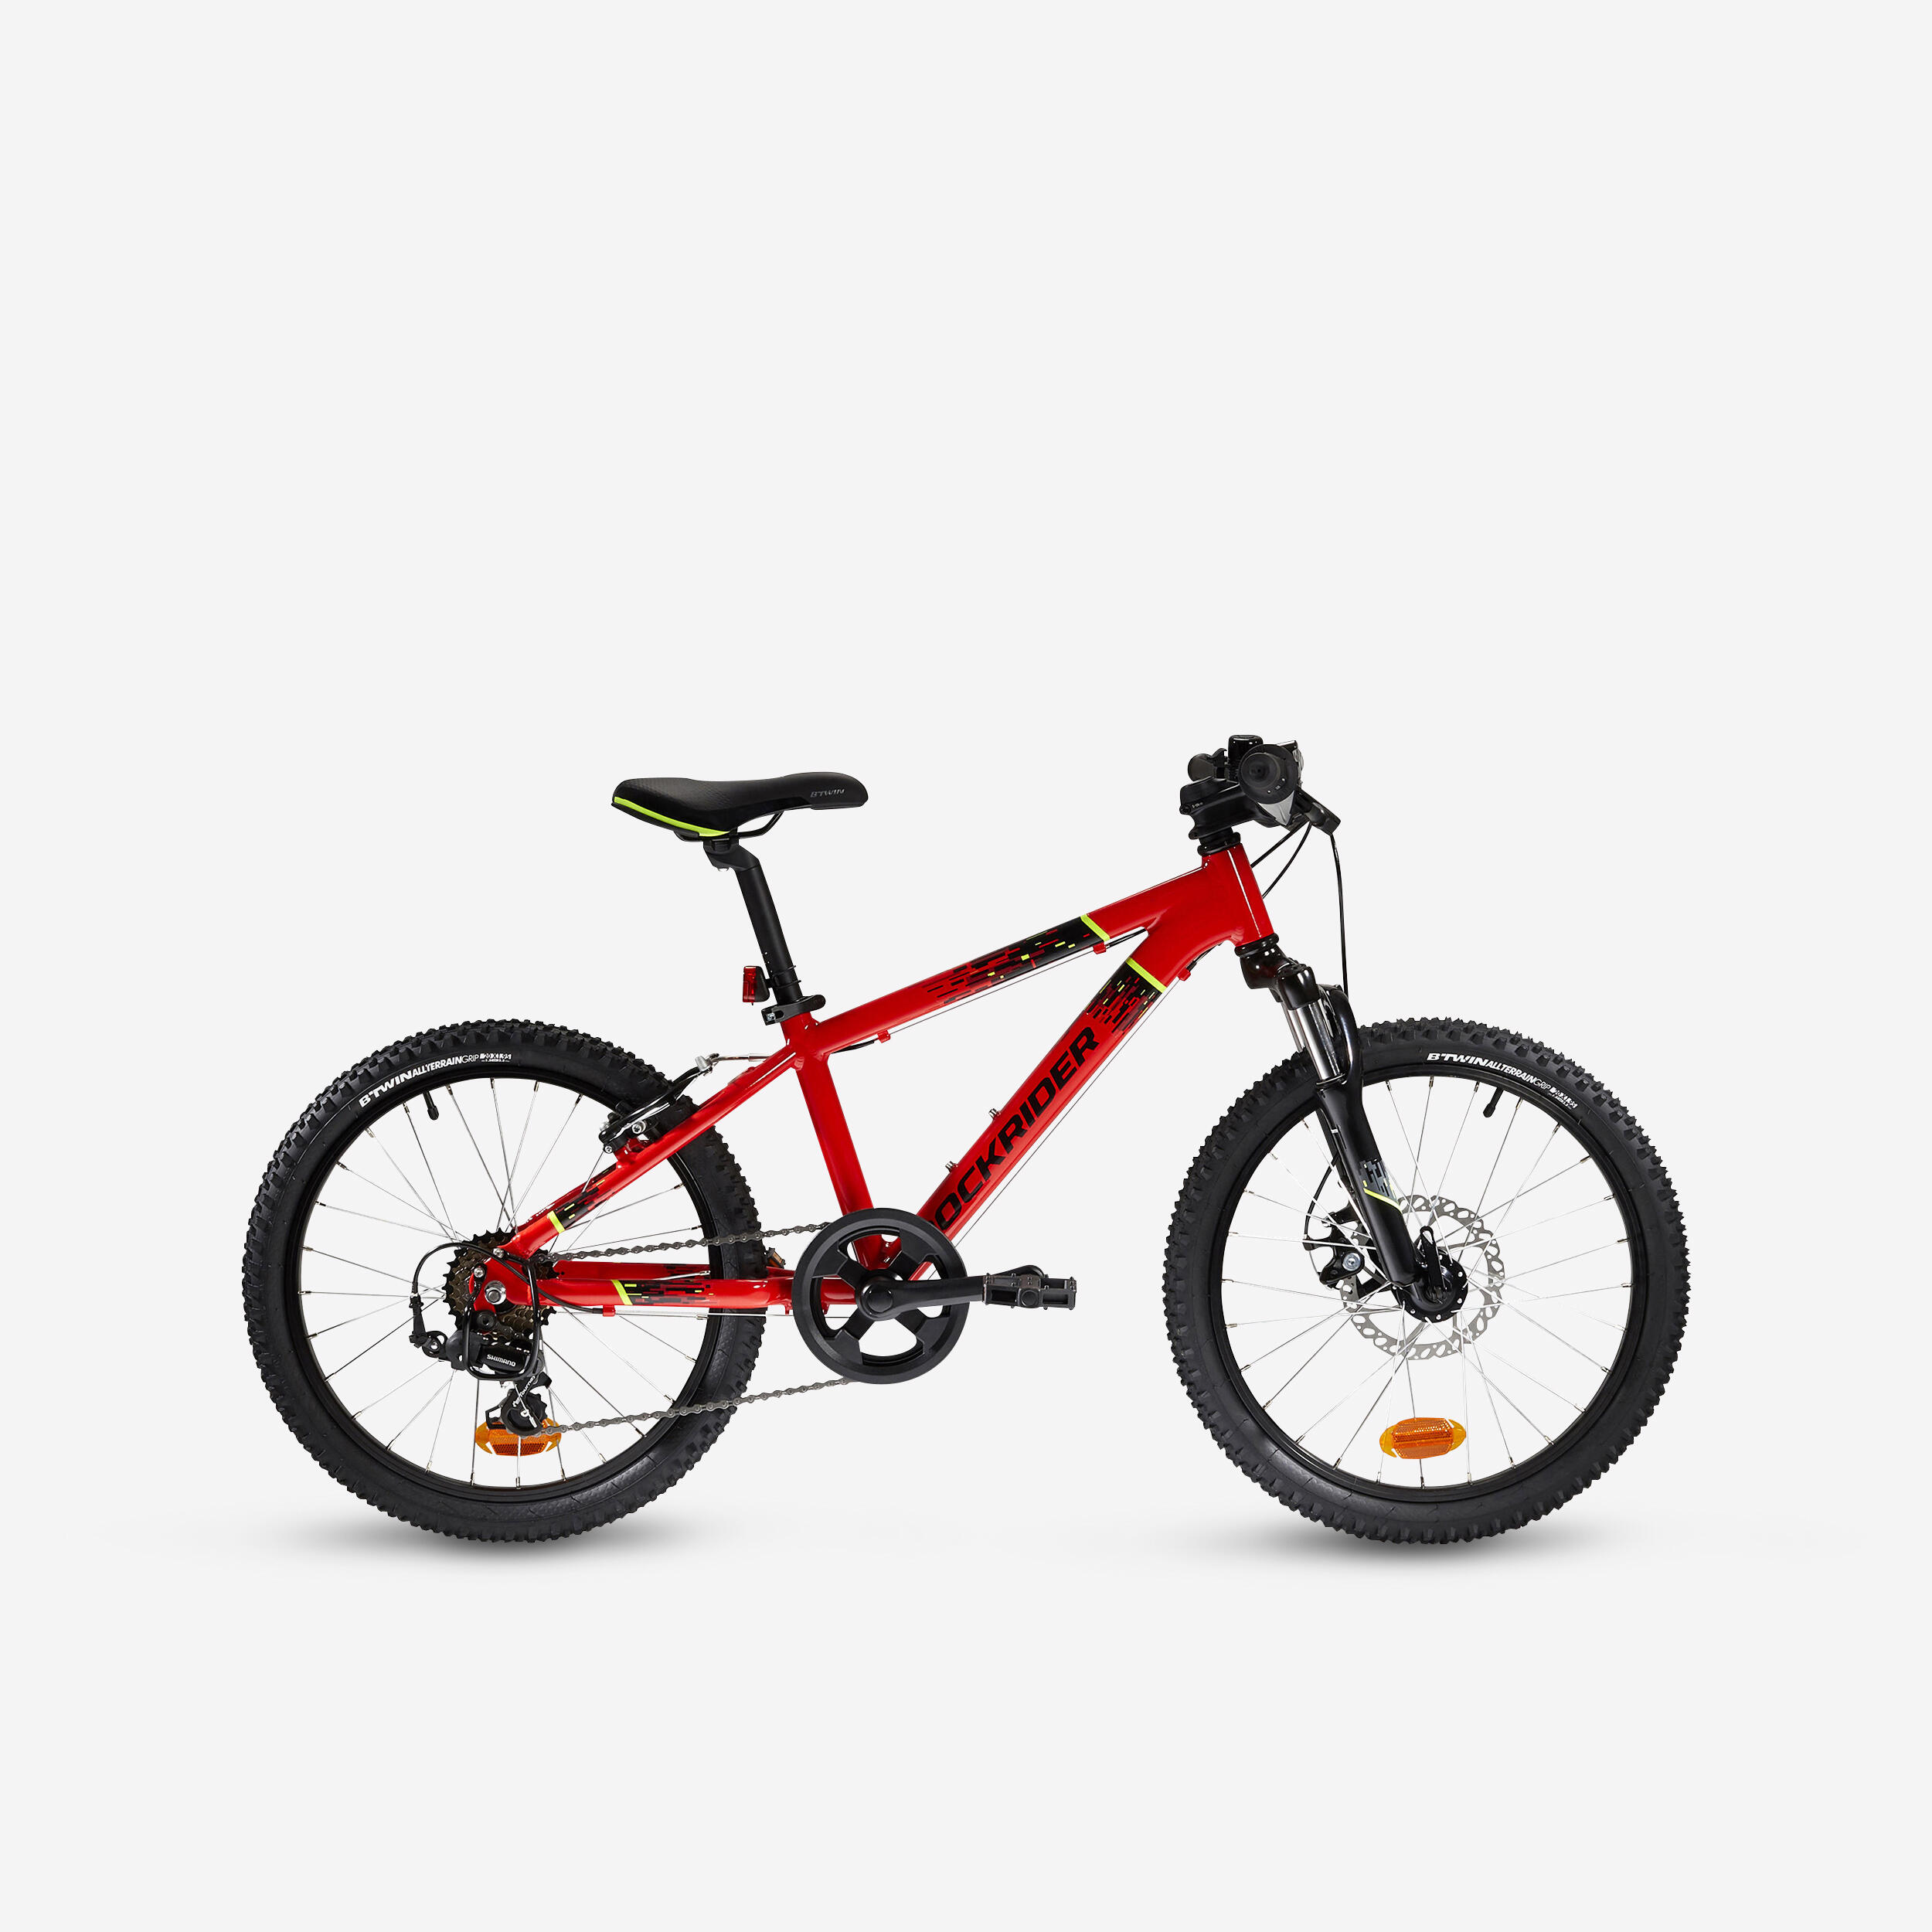 Kids' 20-inch lightweight aluminium mountain bike, red 1/20